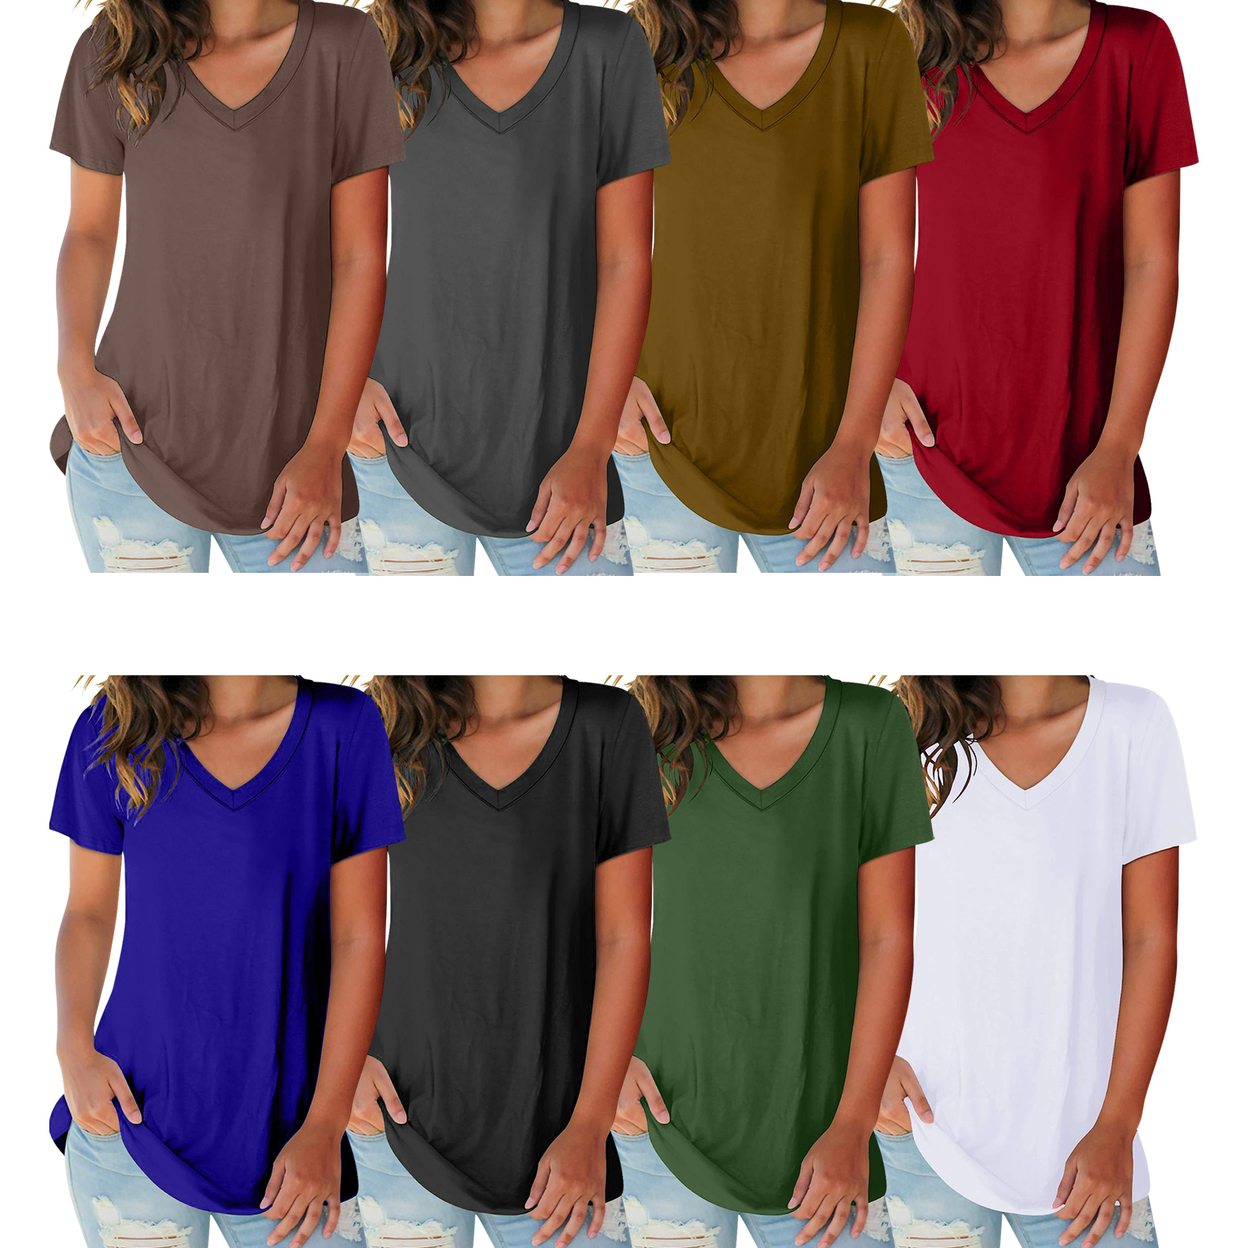 2-Pack: Women's Ultra Soft Smooth Cotton Blend Basic V-Neck Short Sleeve Shirts - Grey & Navy, Xx-large